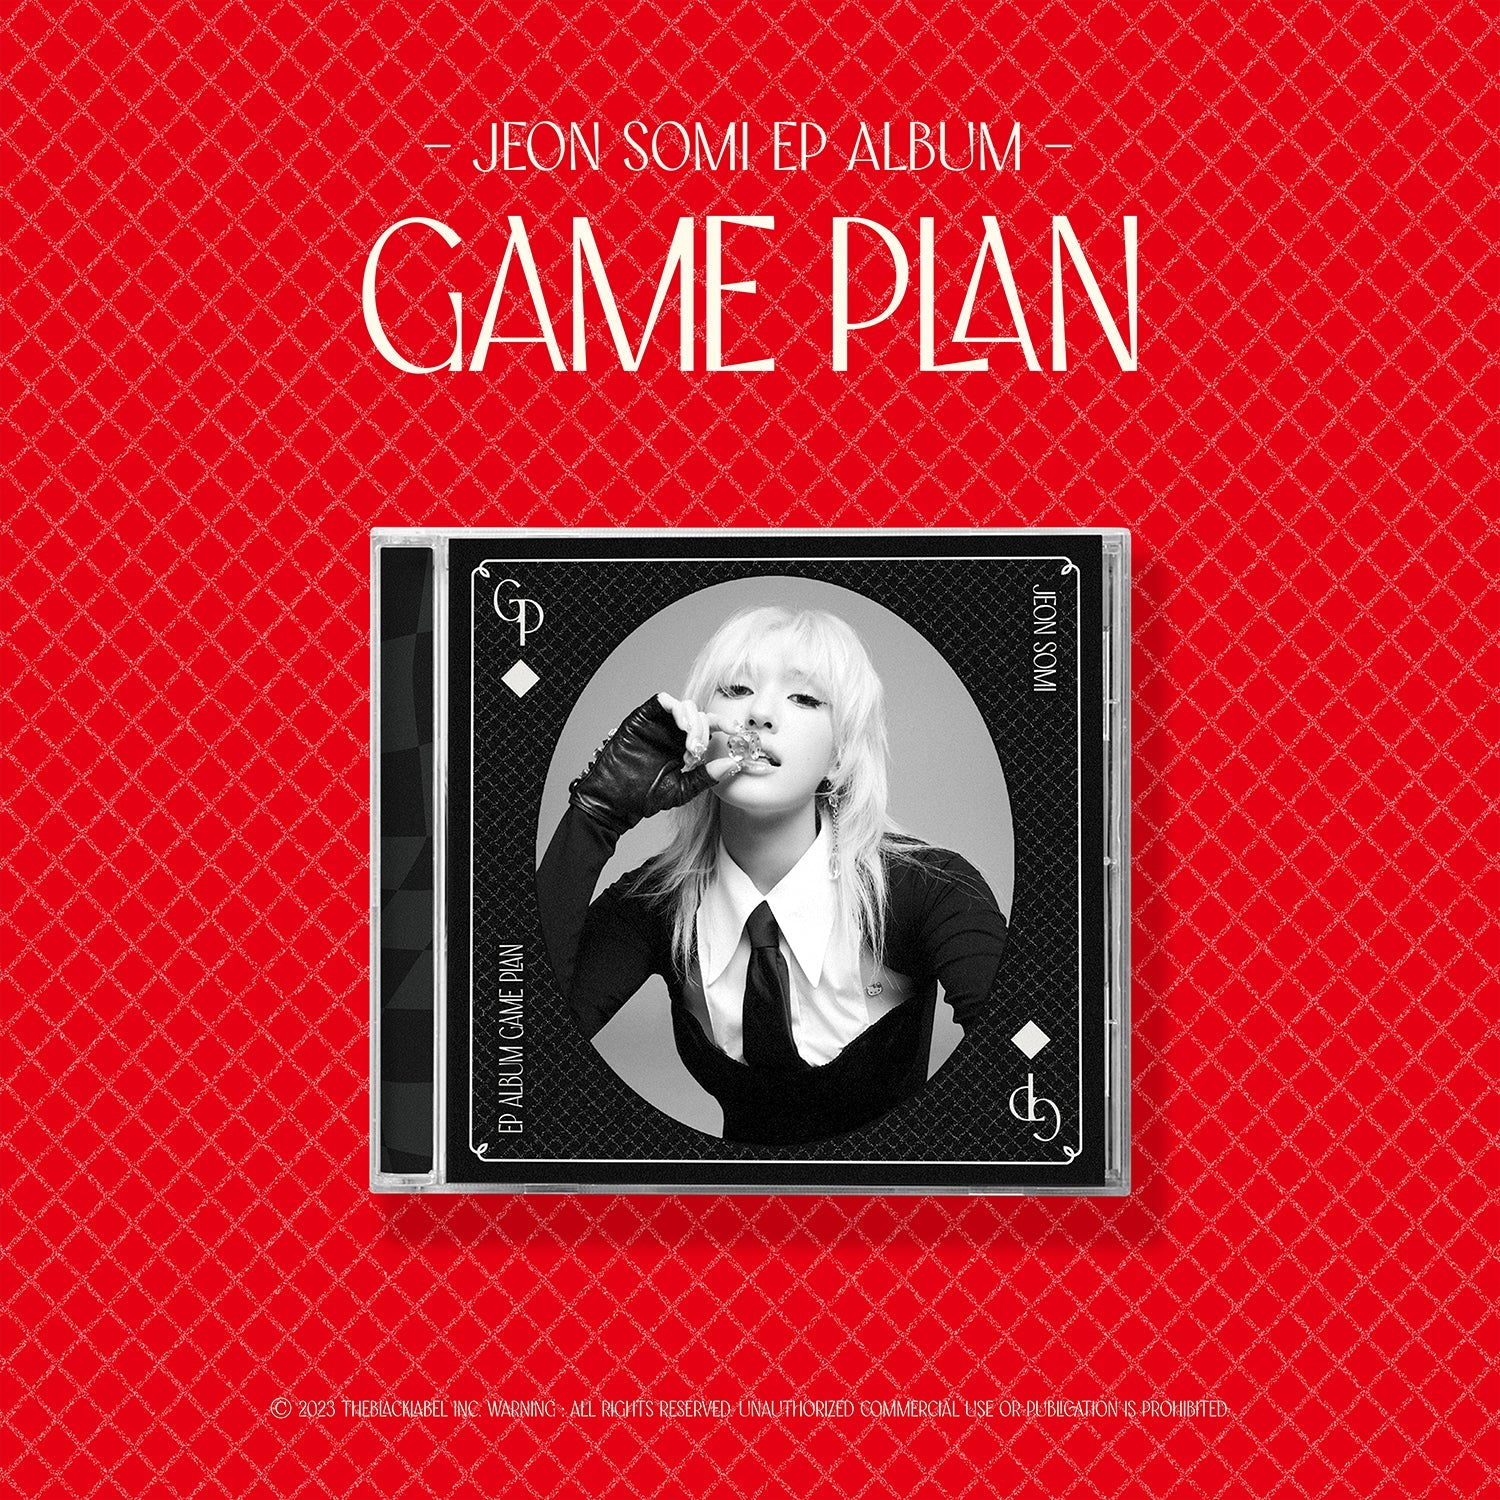 JEON SOMI EP ALBUM 'GAME PLAN' (JEWEL) COVER